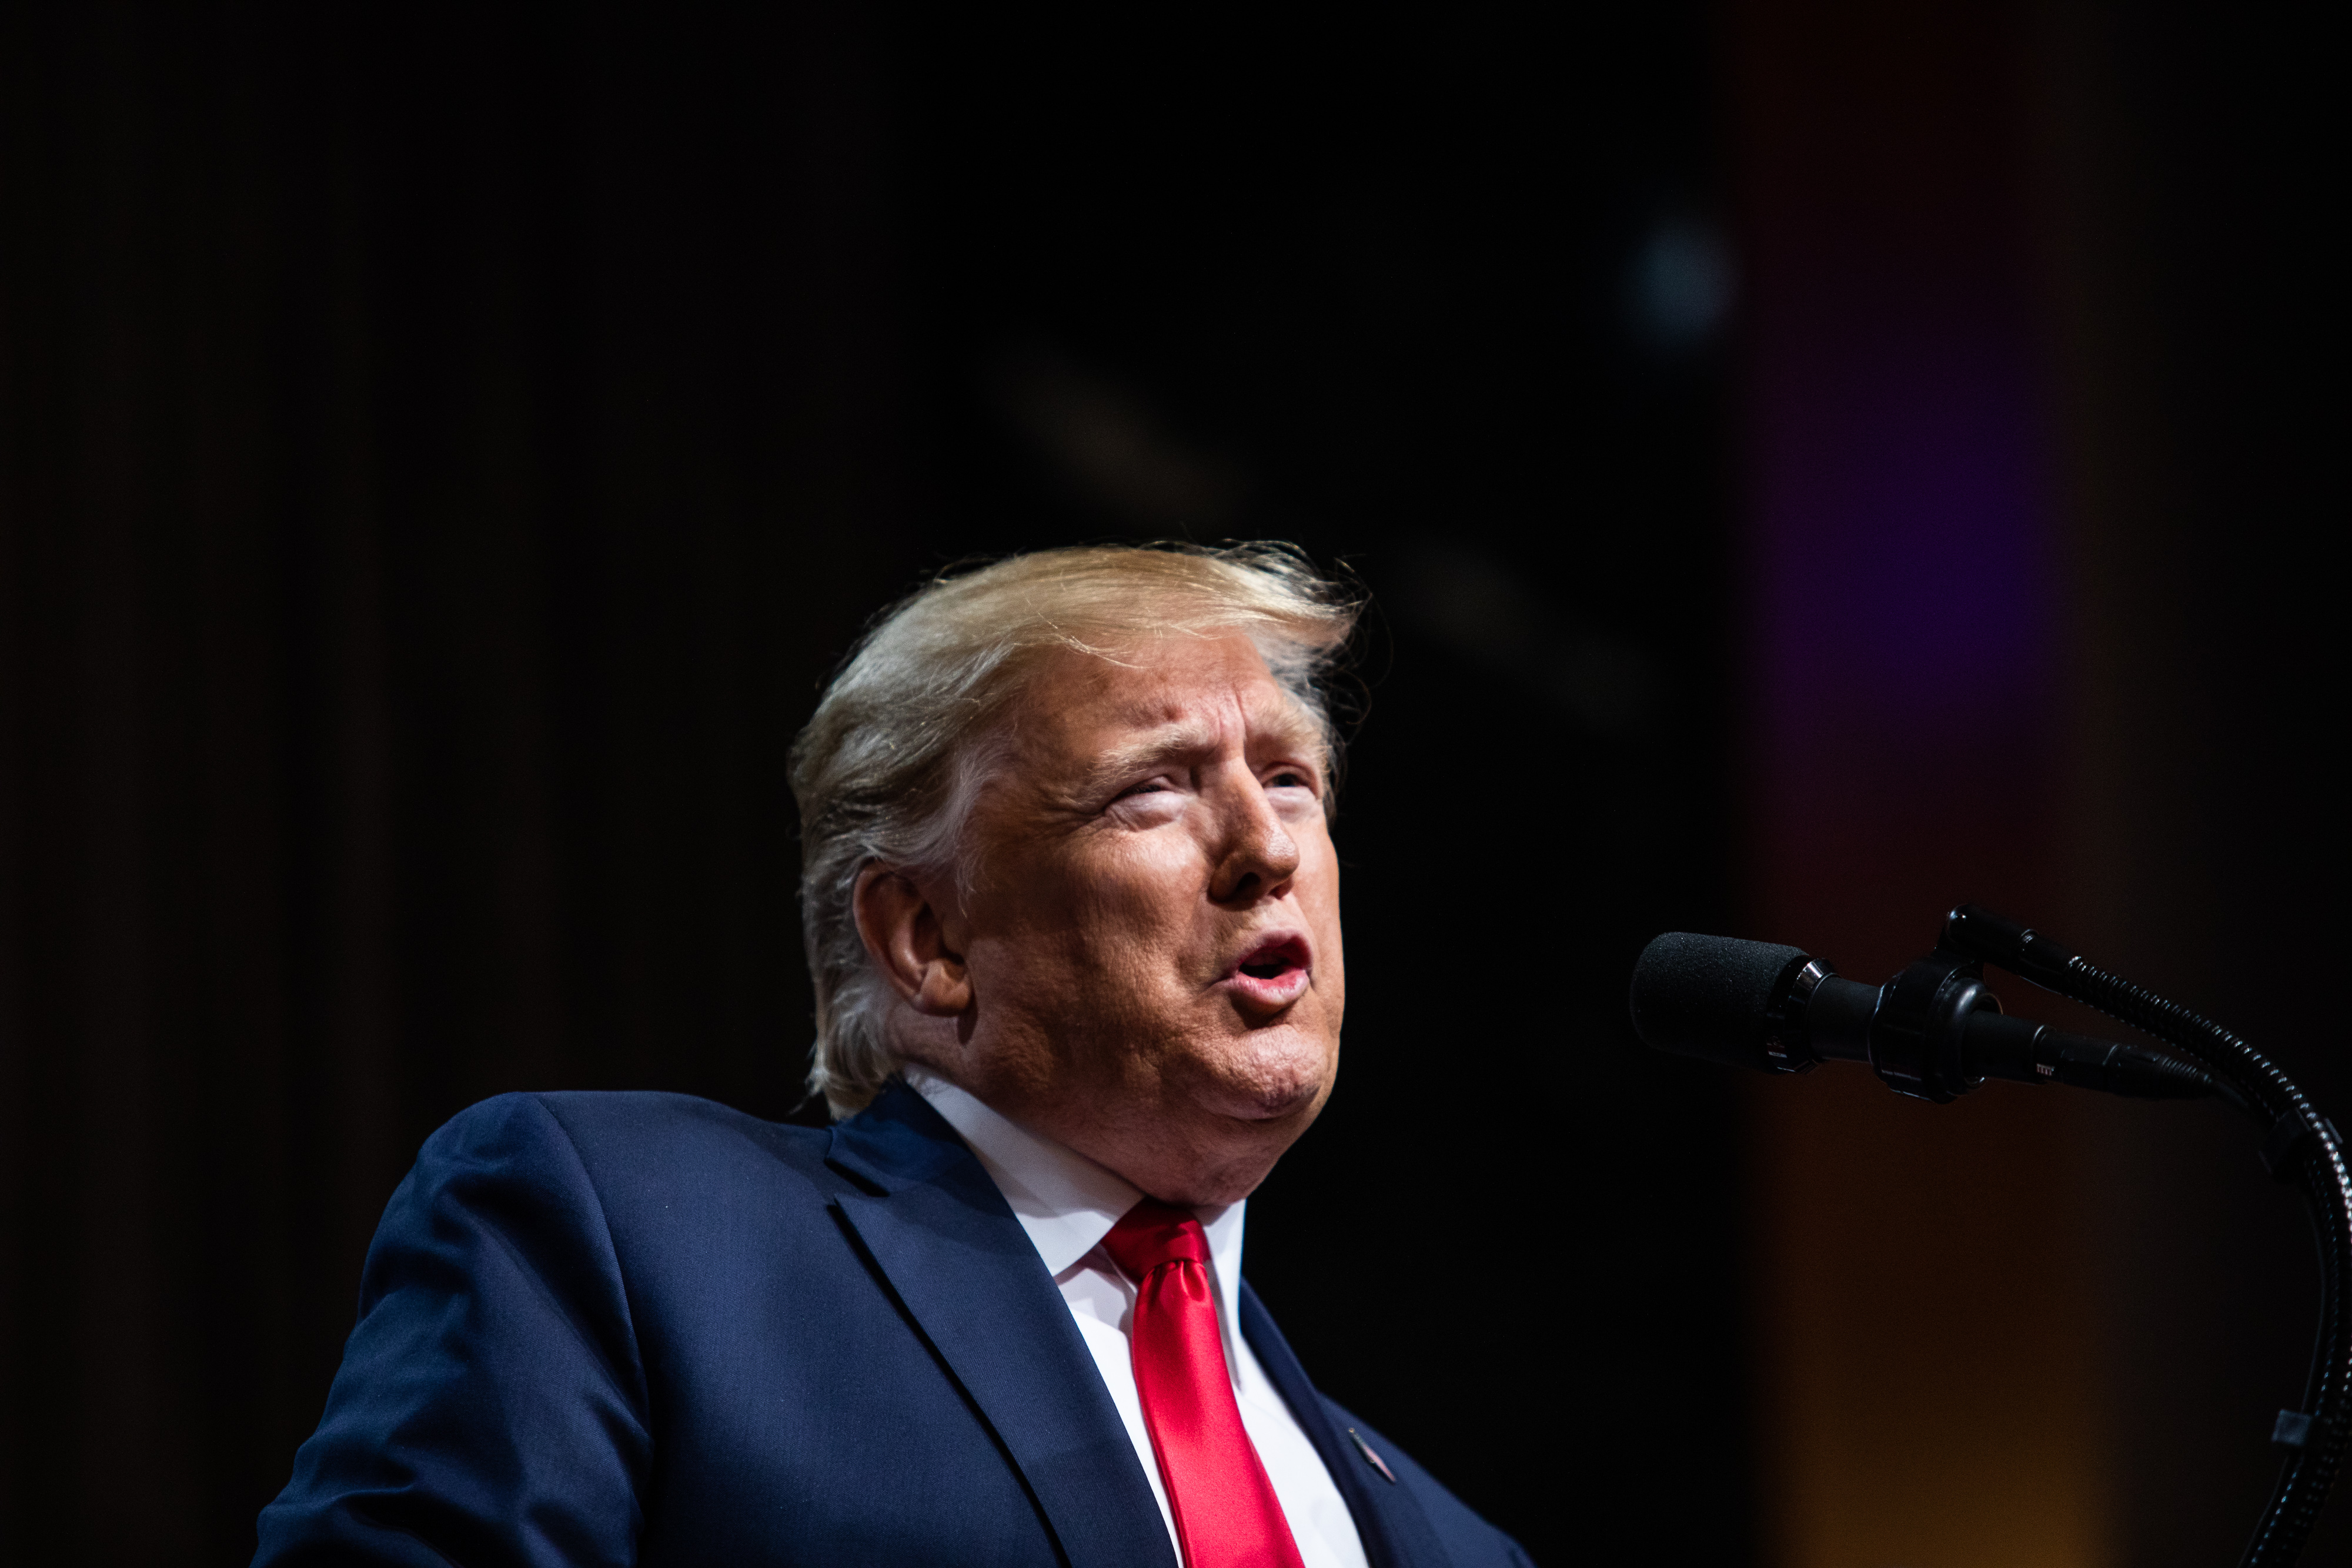 President Donald Trump speaks during an event in New York, U.S., on Nov. 12, 2019. (Demetrius Freeman—Bloomberg/Getty Images)